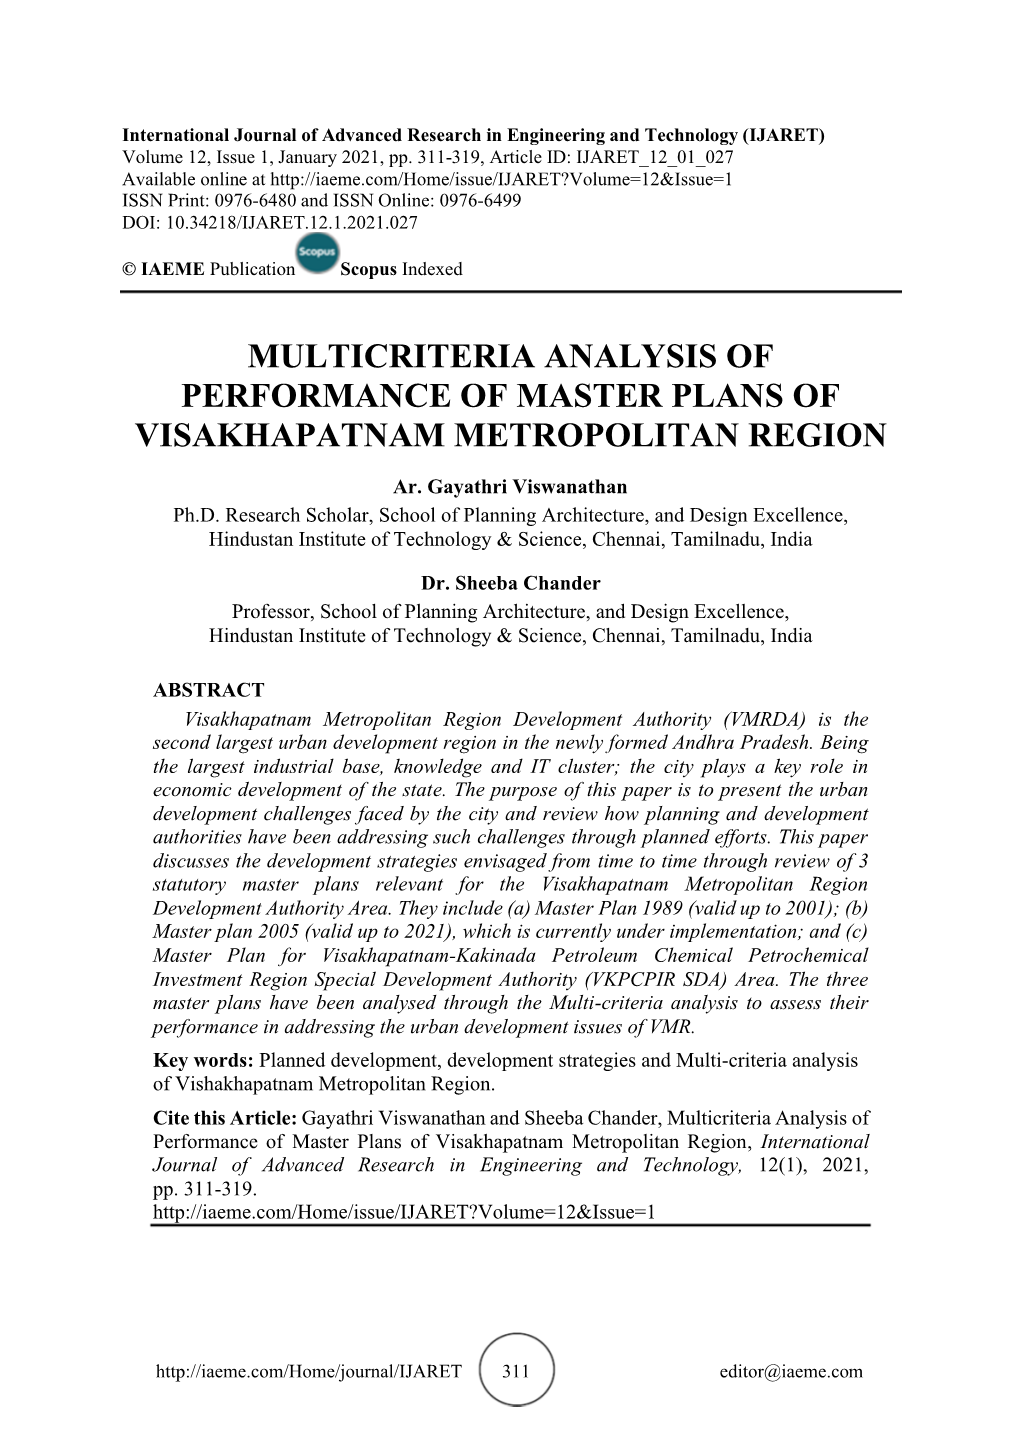 Multicriteria Analysis of Performance of Master Plans of Visakhapatnam Metropolitan Region